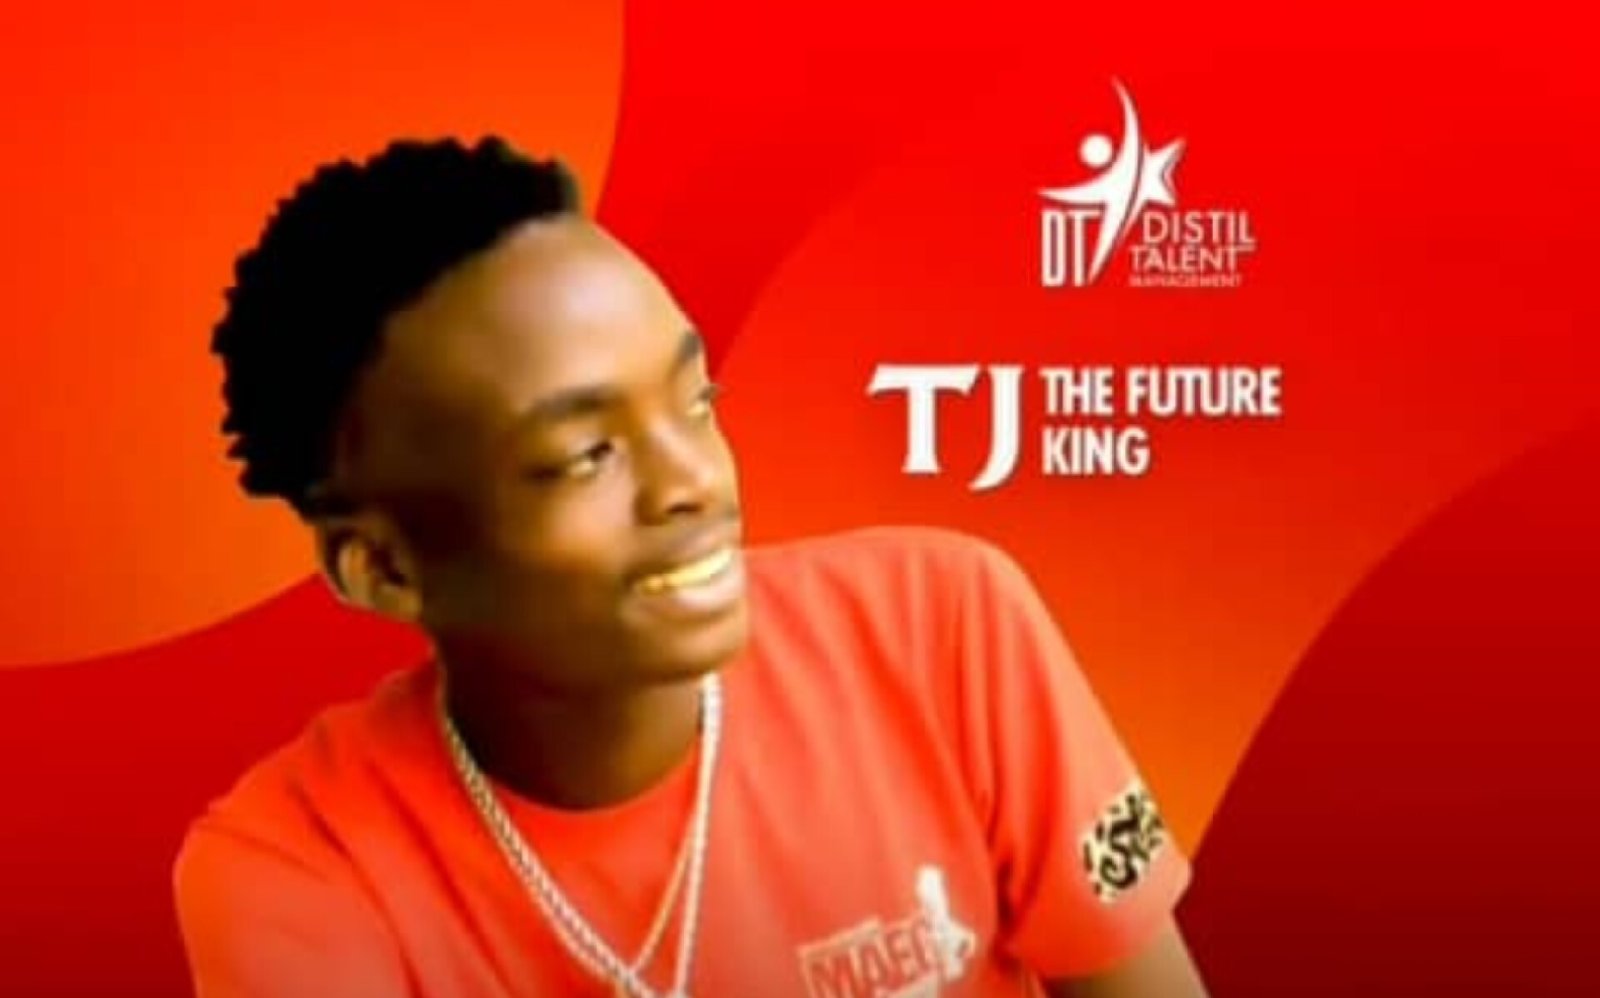 Tj the Future King